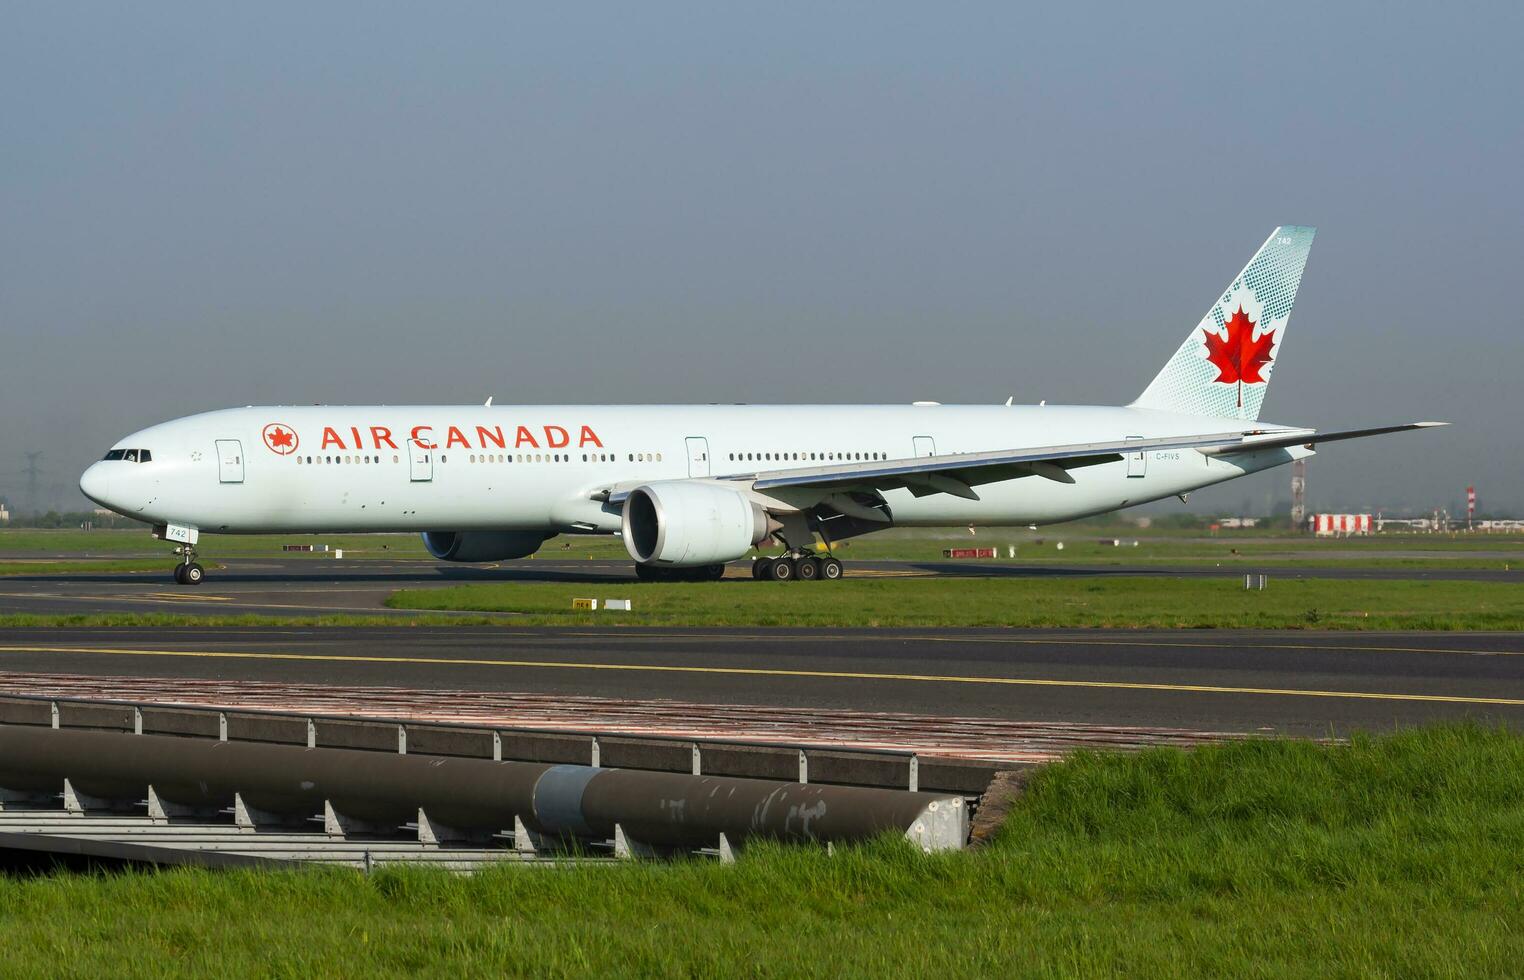 Air Canada Boeing 777-300ER C-FIVS passenger plane arrival and landing at Paris Charles de Gaulle Airport photo